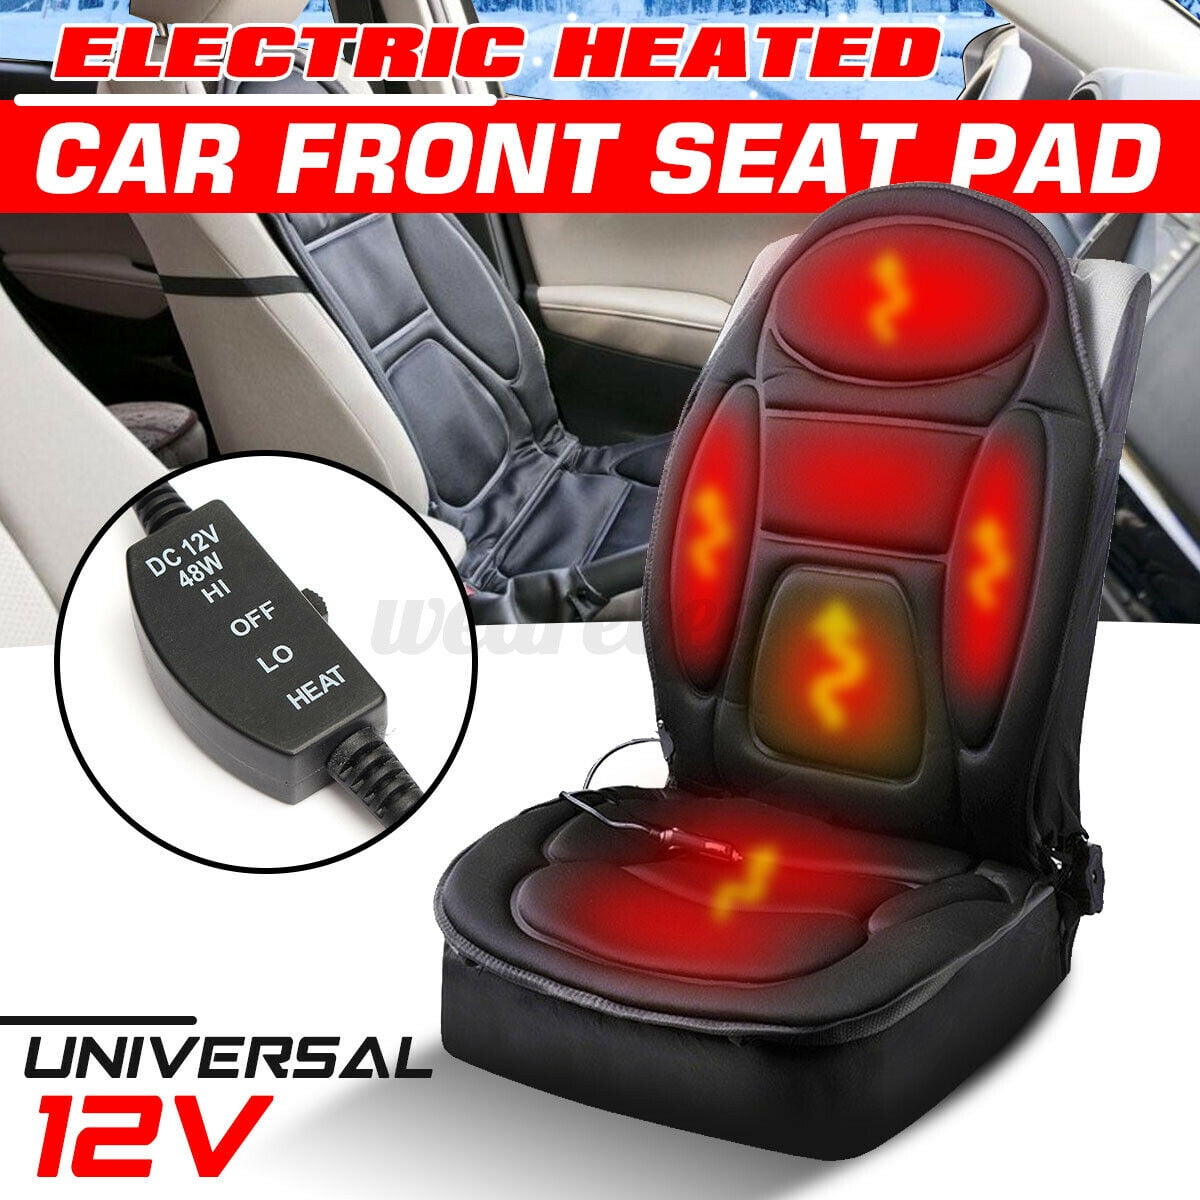 Seat Heater Car